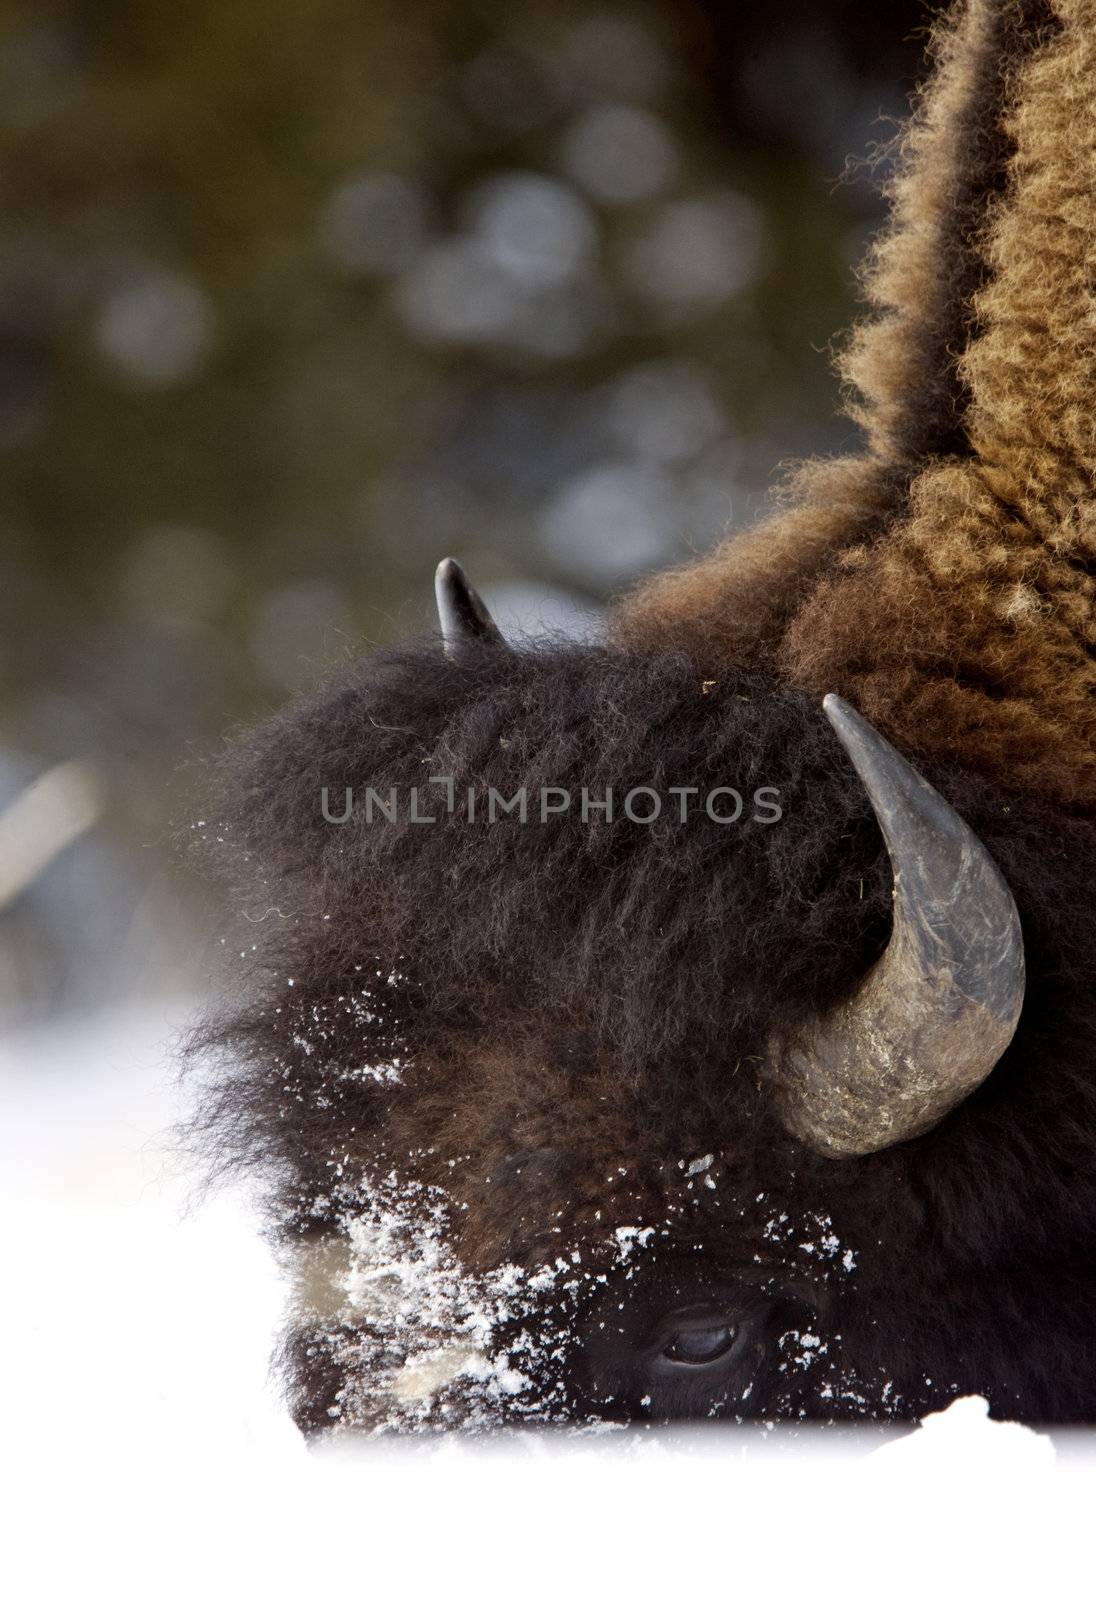 Bison Buffalo Wyoming Yellowstone